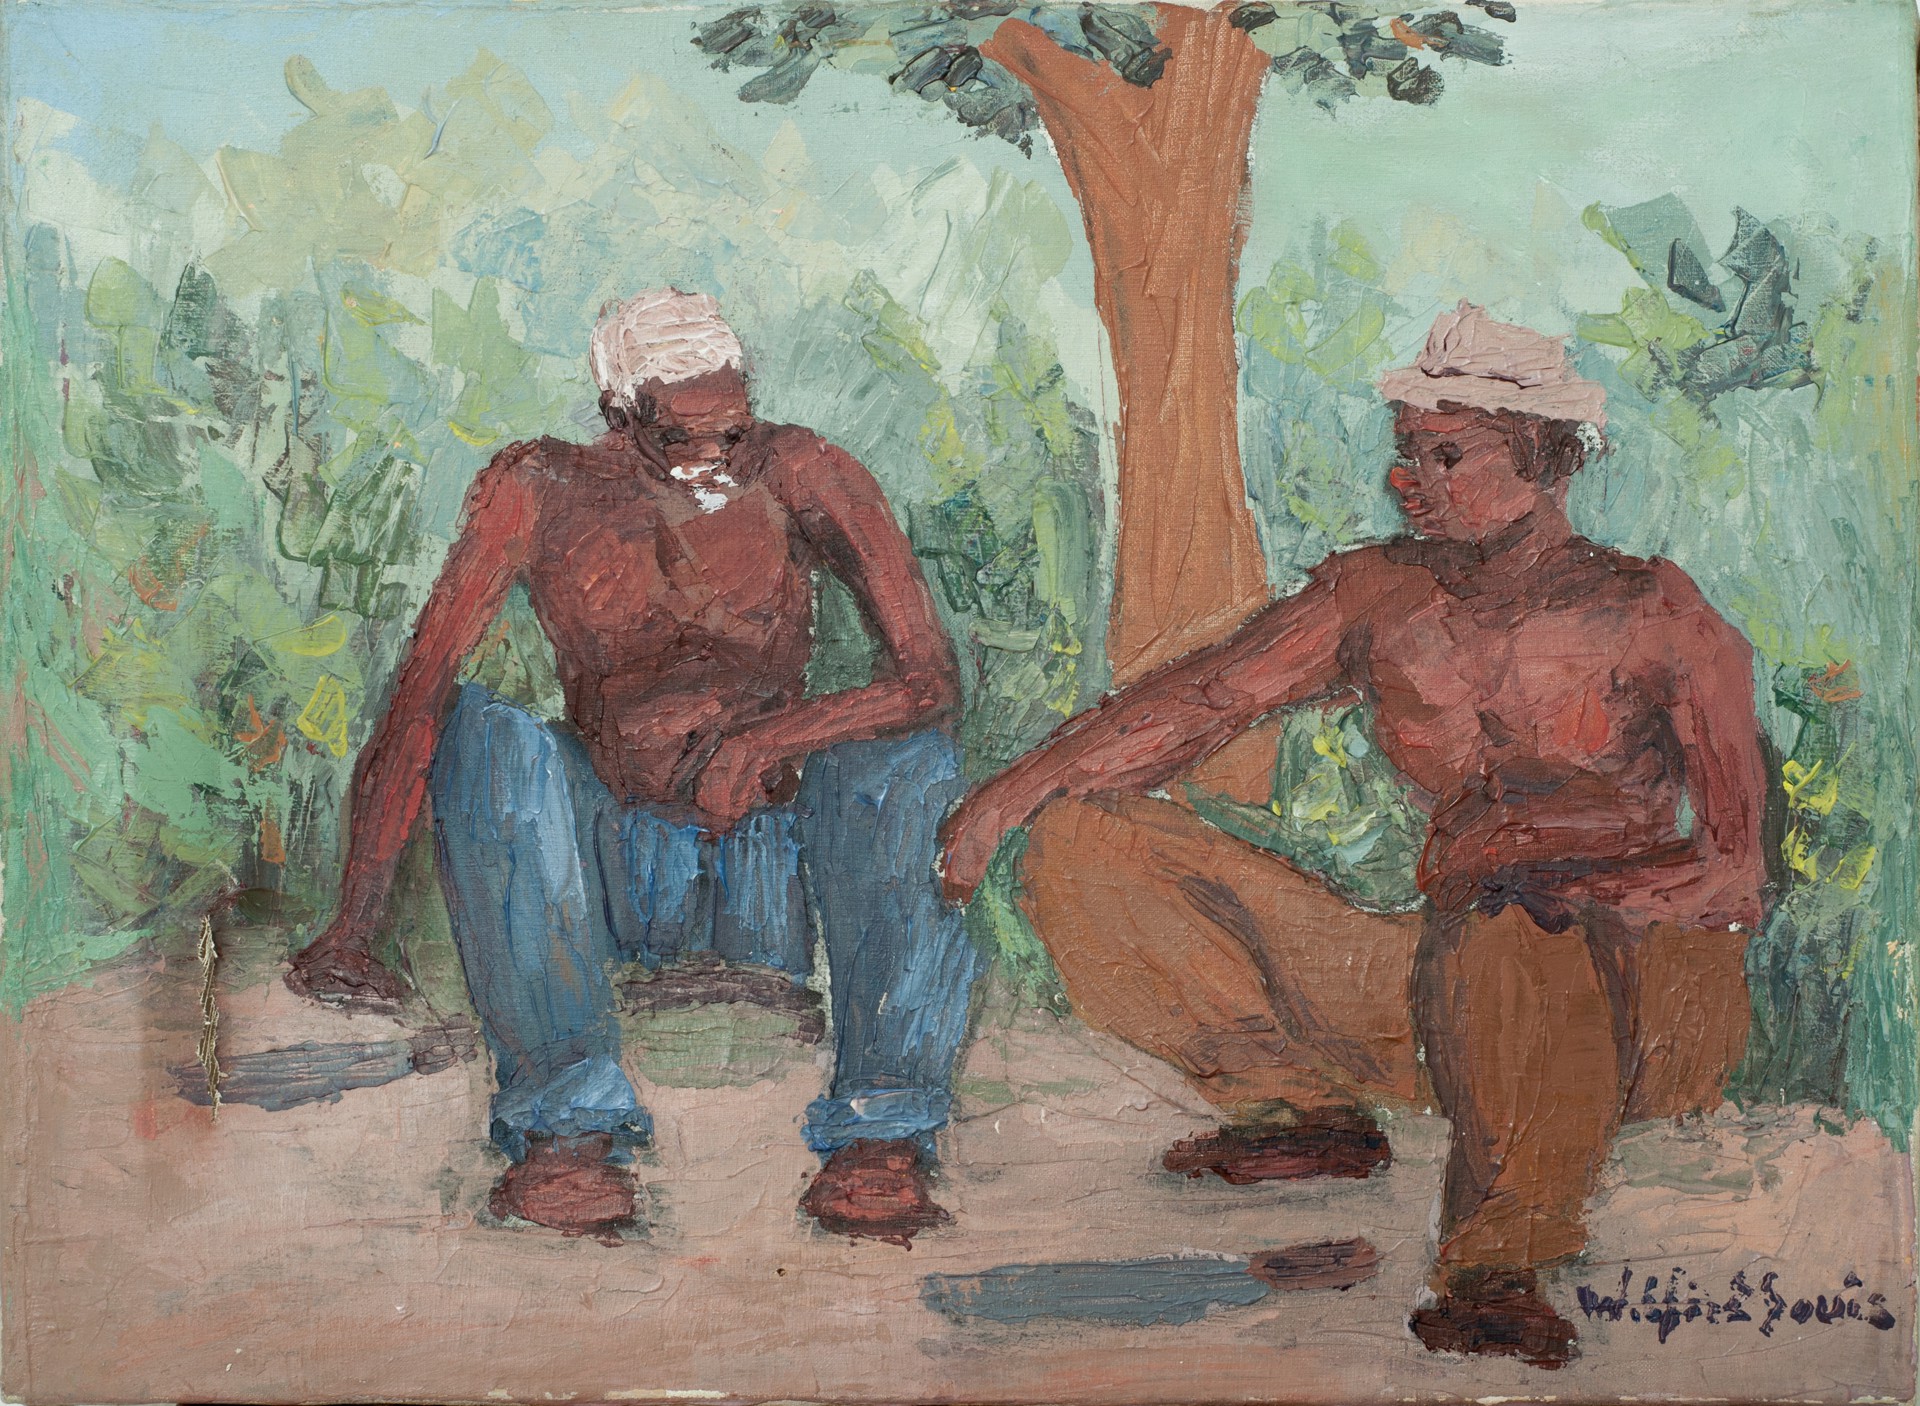 Conversation Between Two Men #17-3-96GSN by Wilfrid Louis (Haitian, b. 1943)